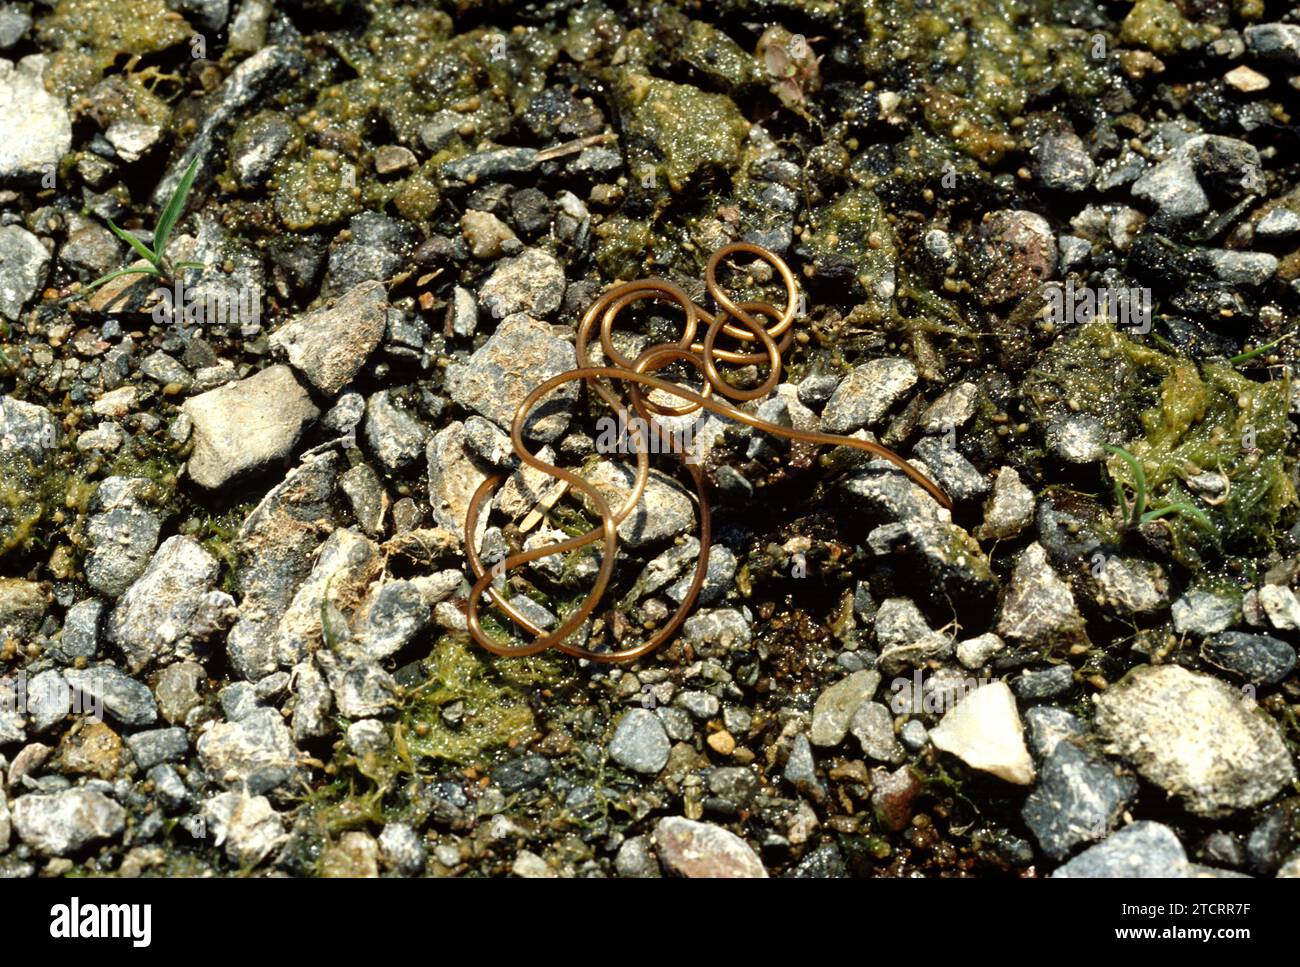 Horsehair worm (Gordius sp.). This photo was taken in Alt Emporda, Girona province, Catalonia, Spain. Stock Photo